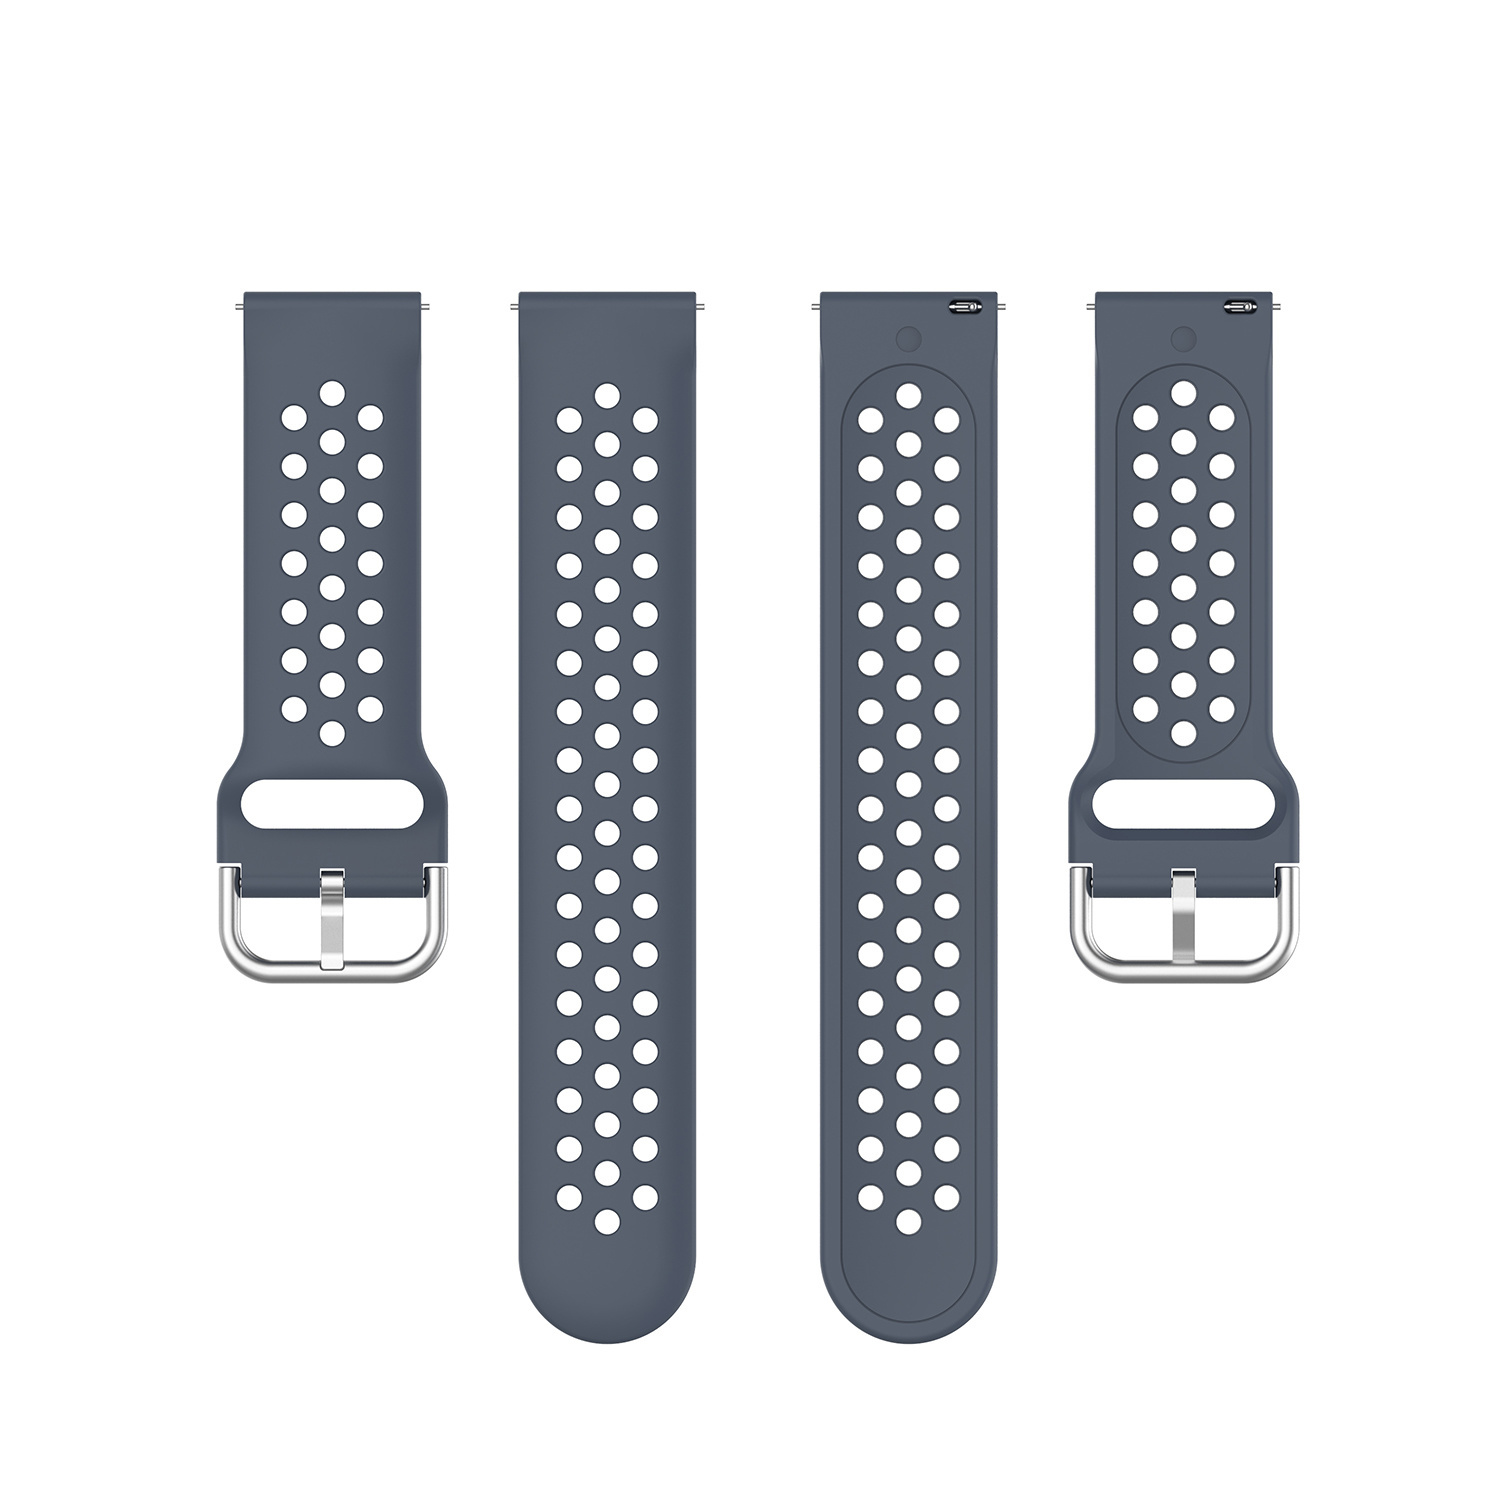 Cinturino doppia fibbia per Huawei Watch GT - grigio